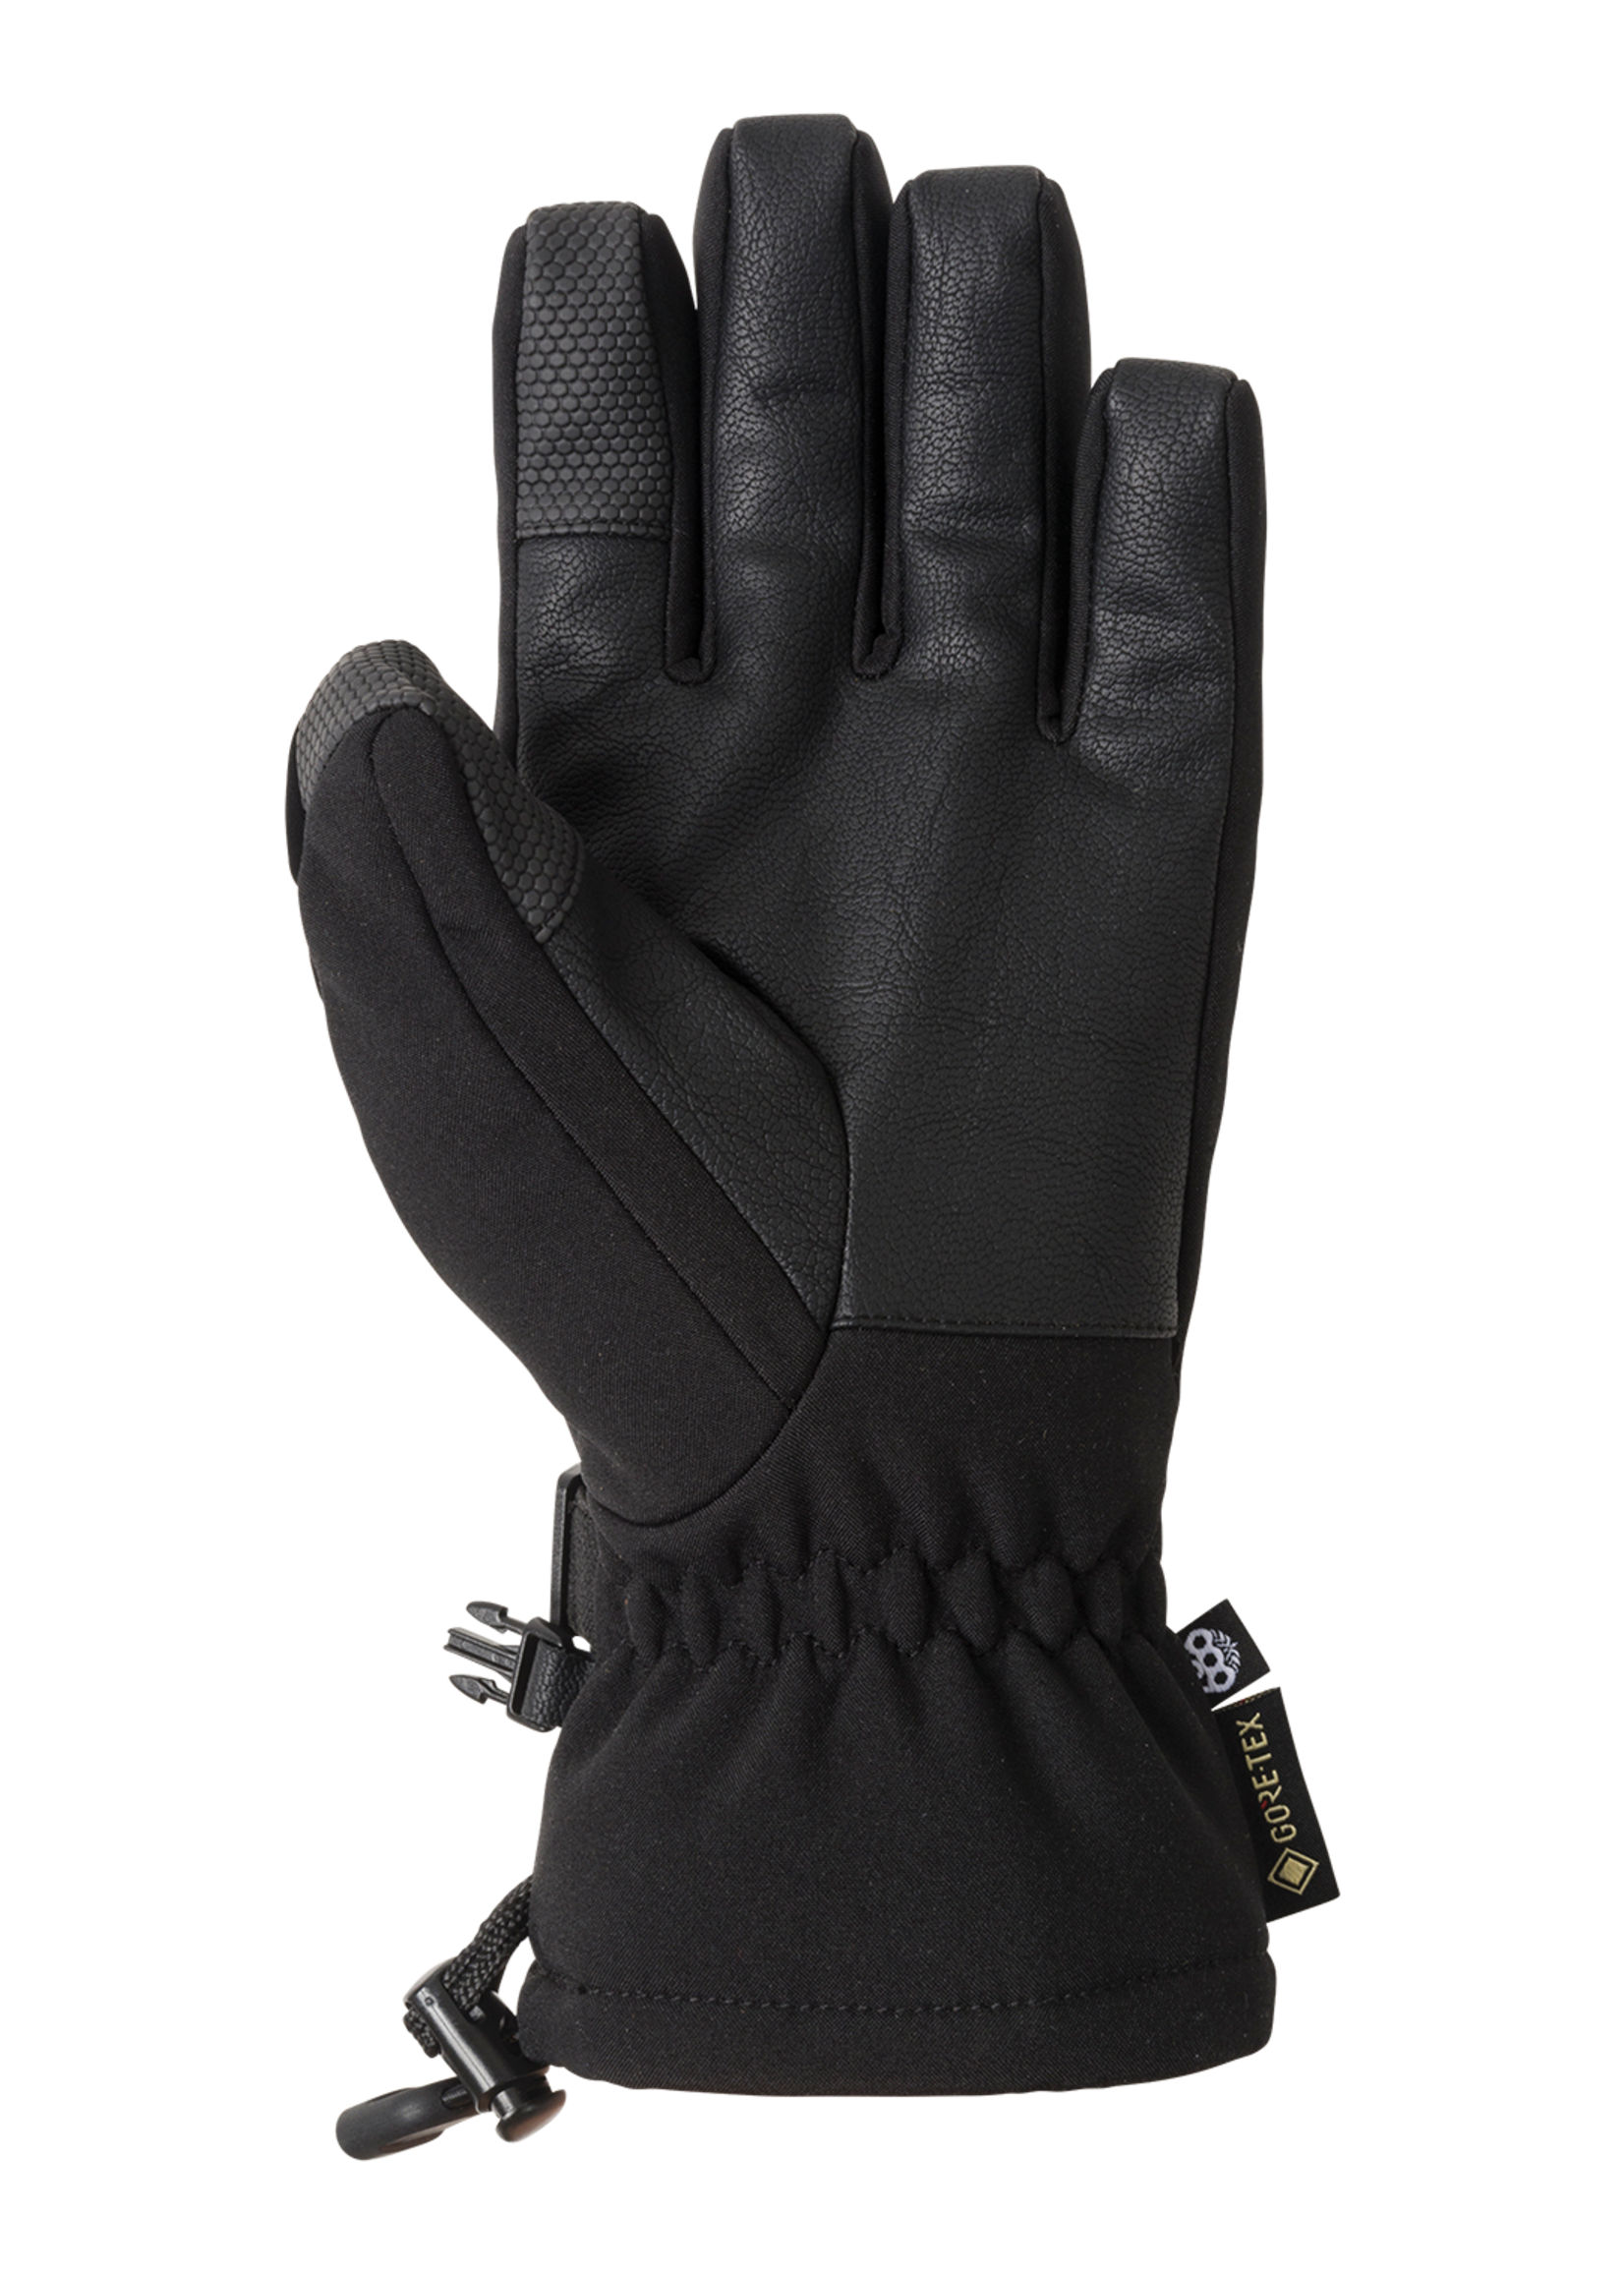 686 686 Women's GORE Linear Glove